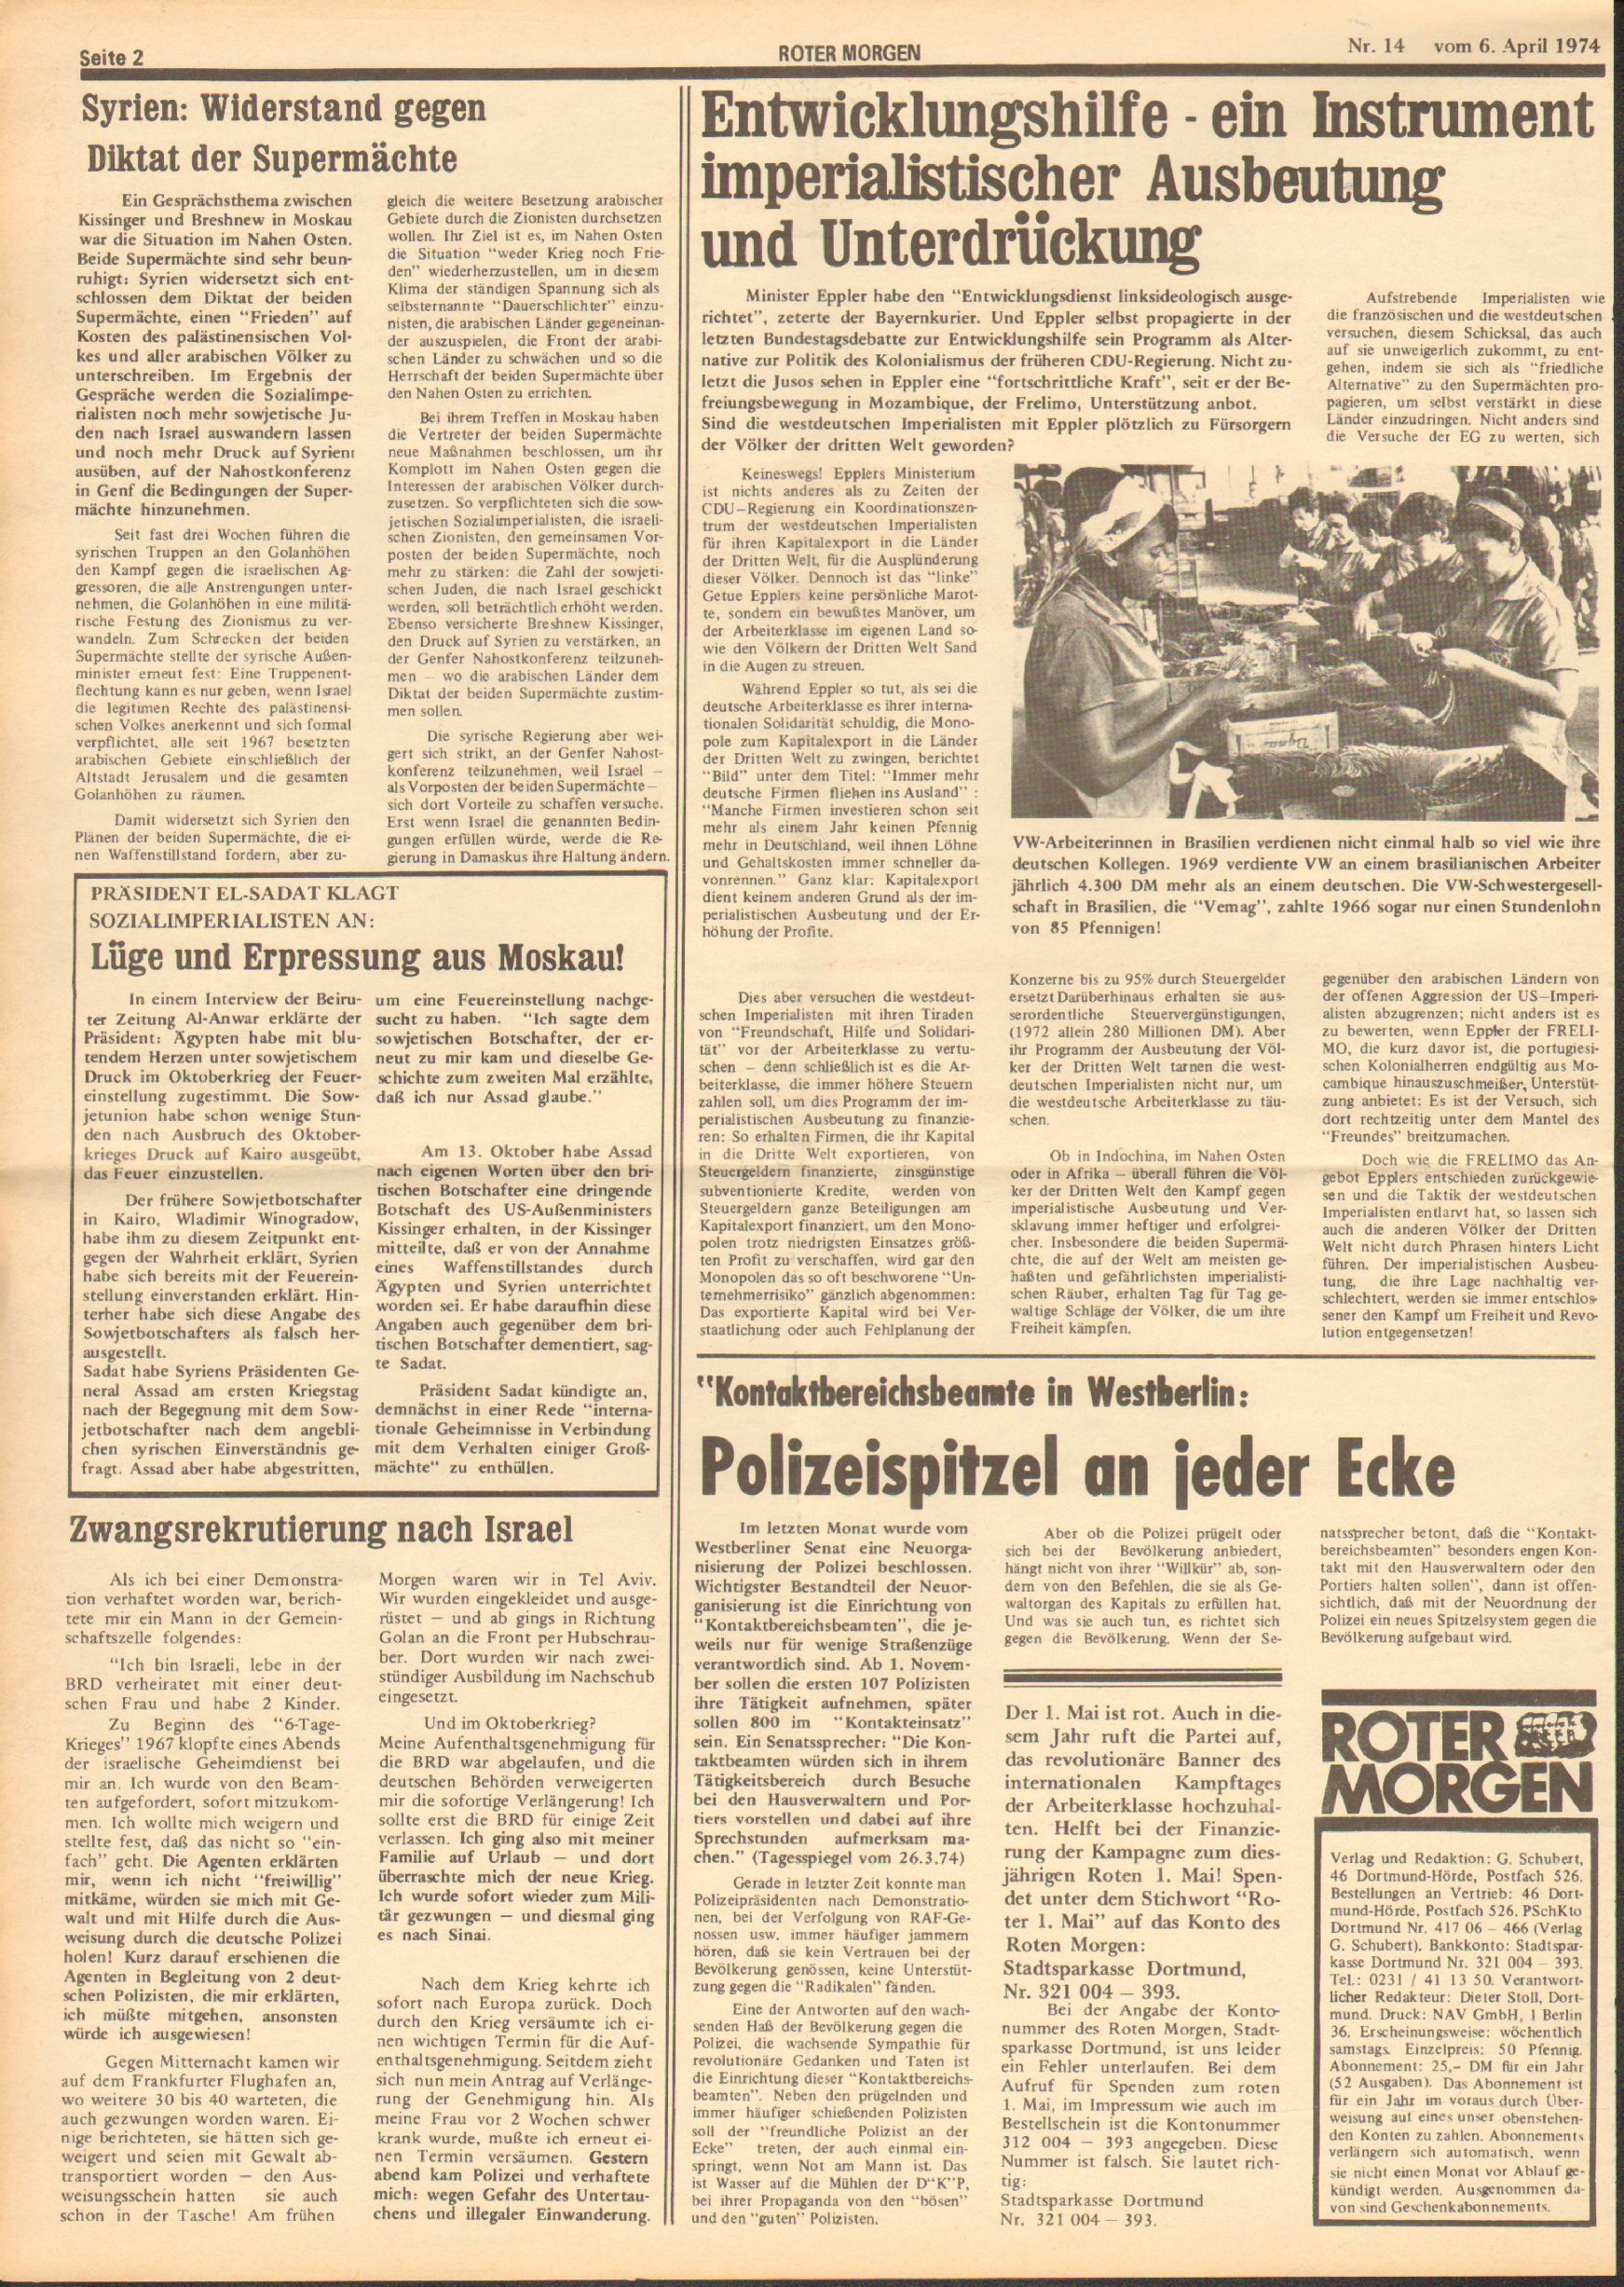 Roter Morgen, 8. Jg., 6. April 1974, Nr. 14, Seite 2